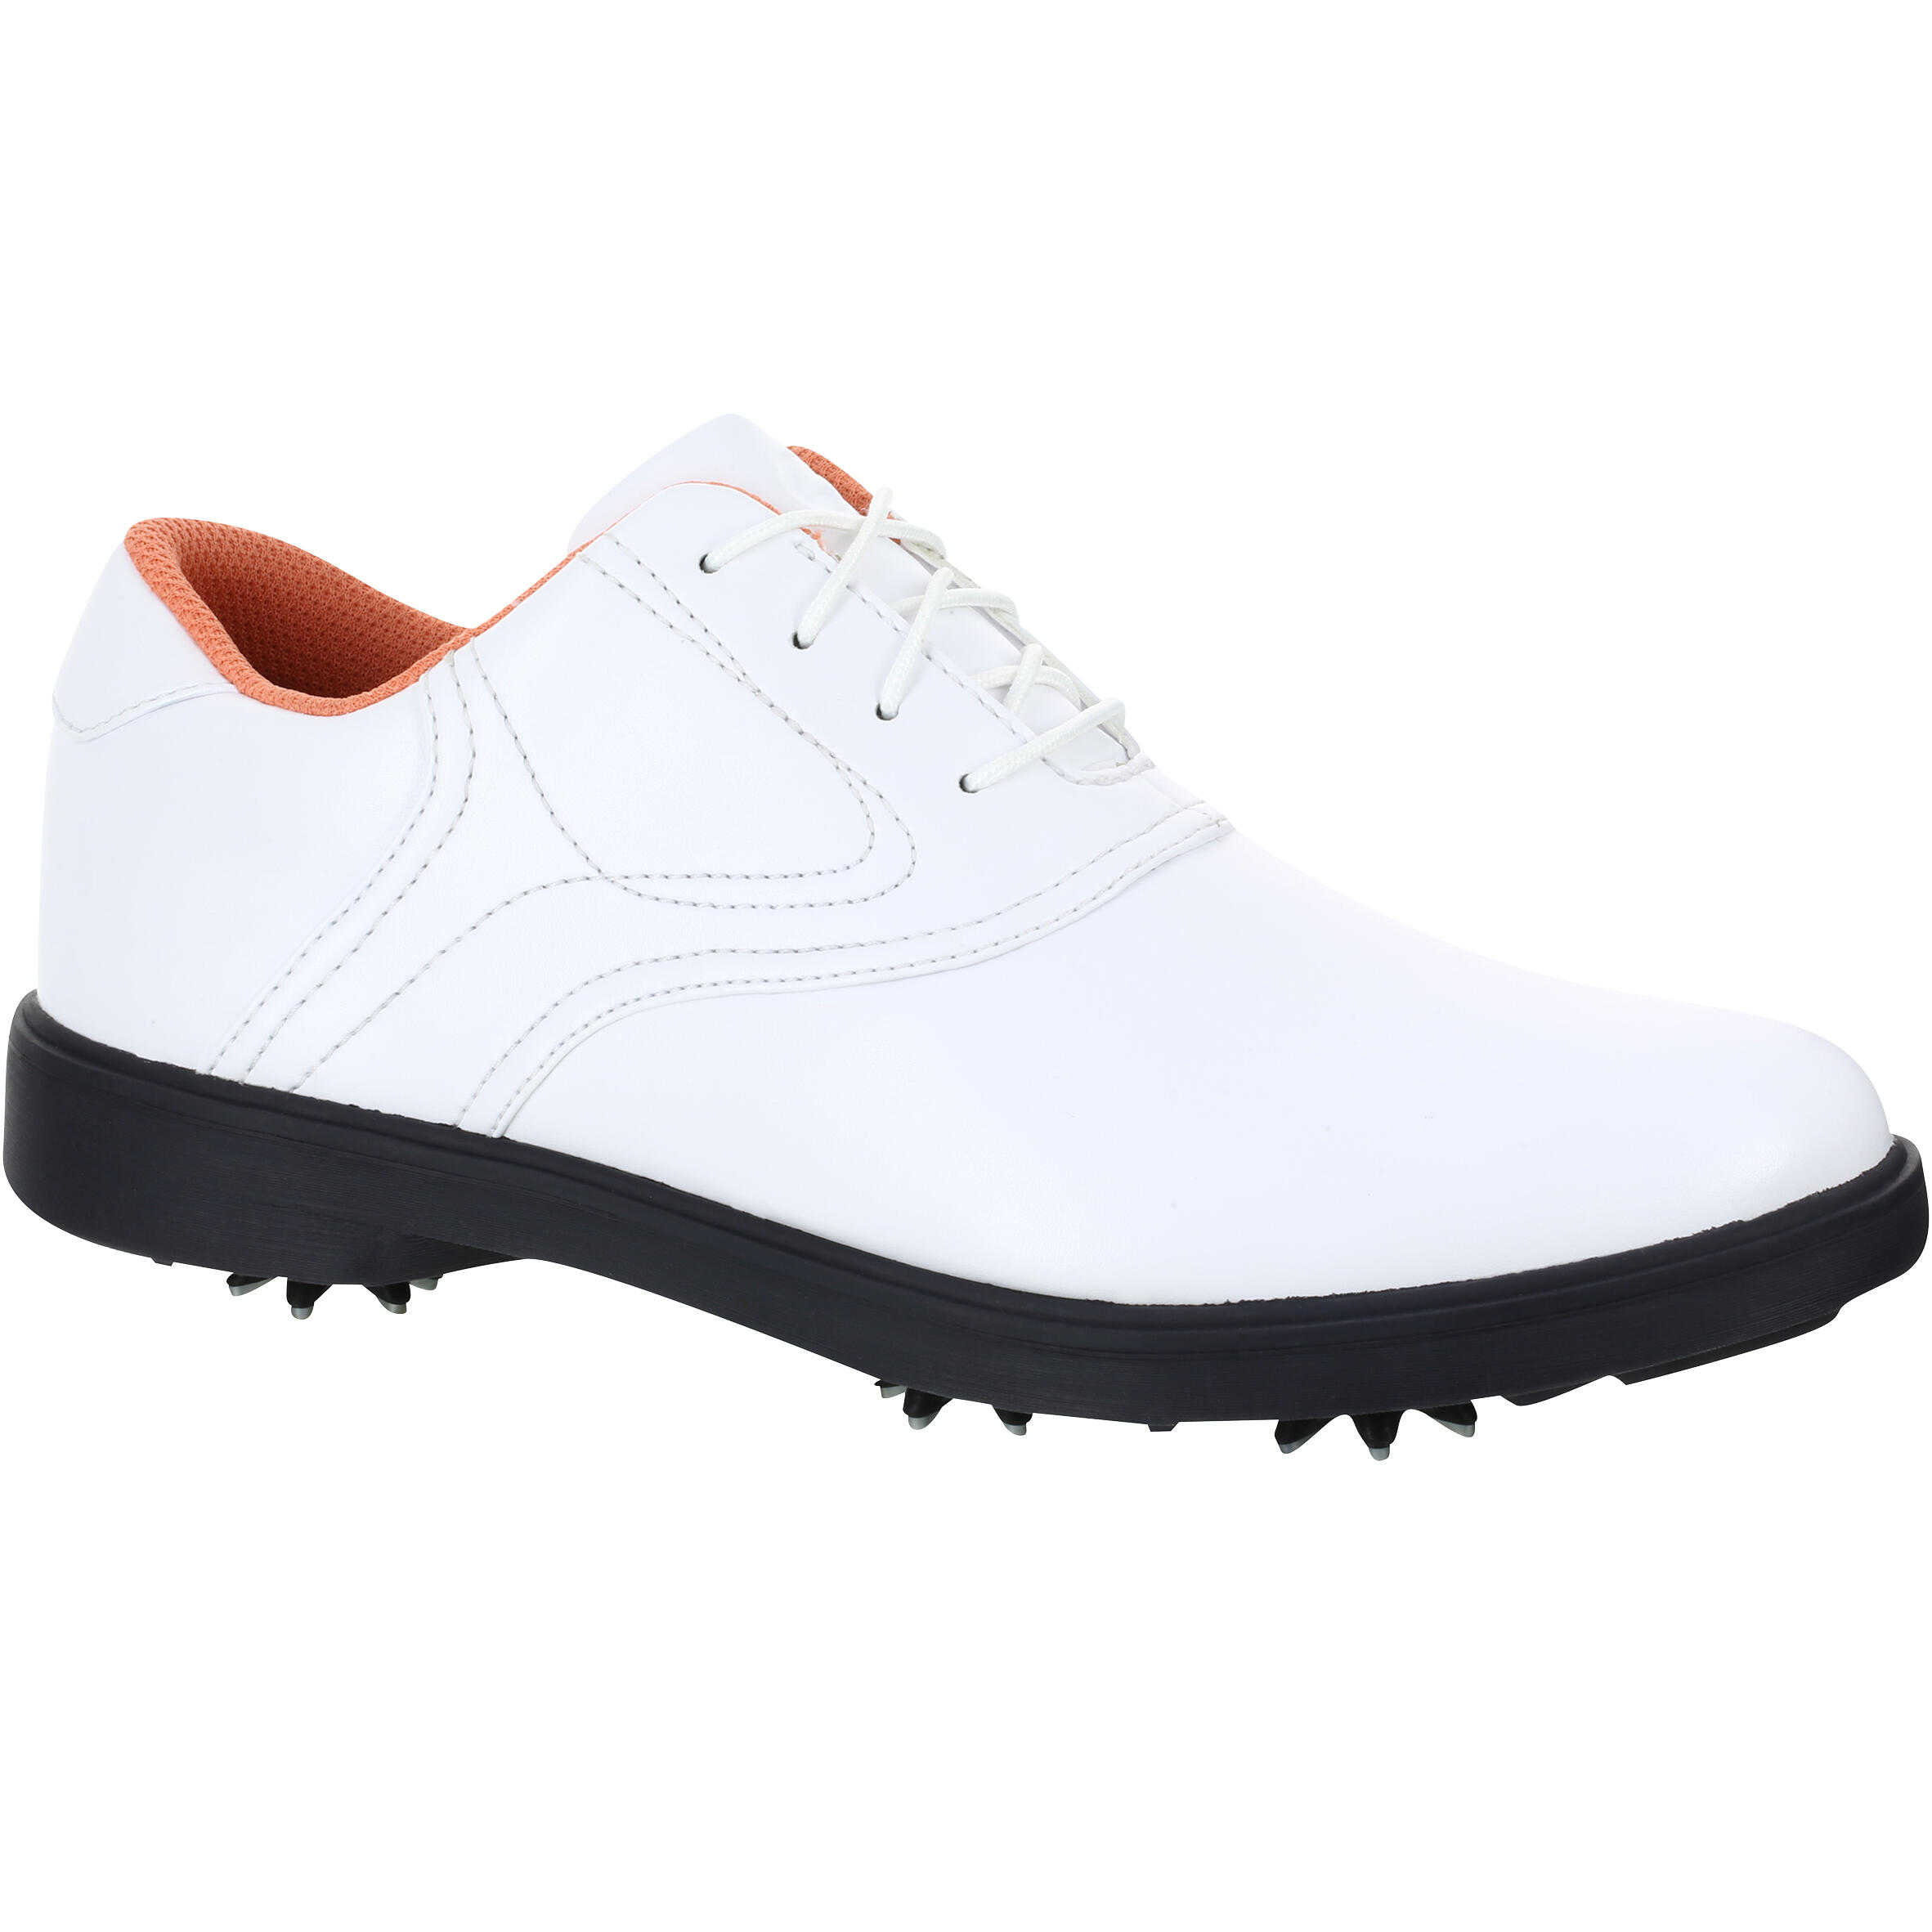 Golf Shoes Hong Kong | Buy Golf Shoes 